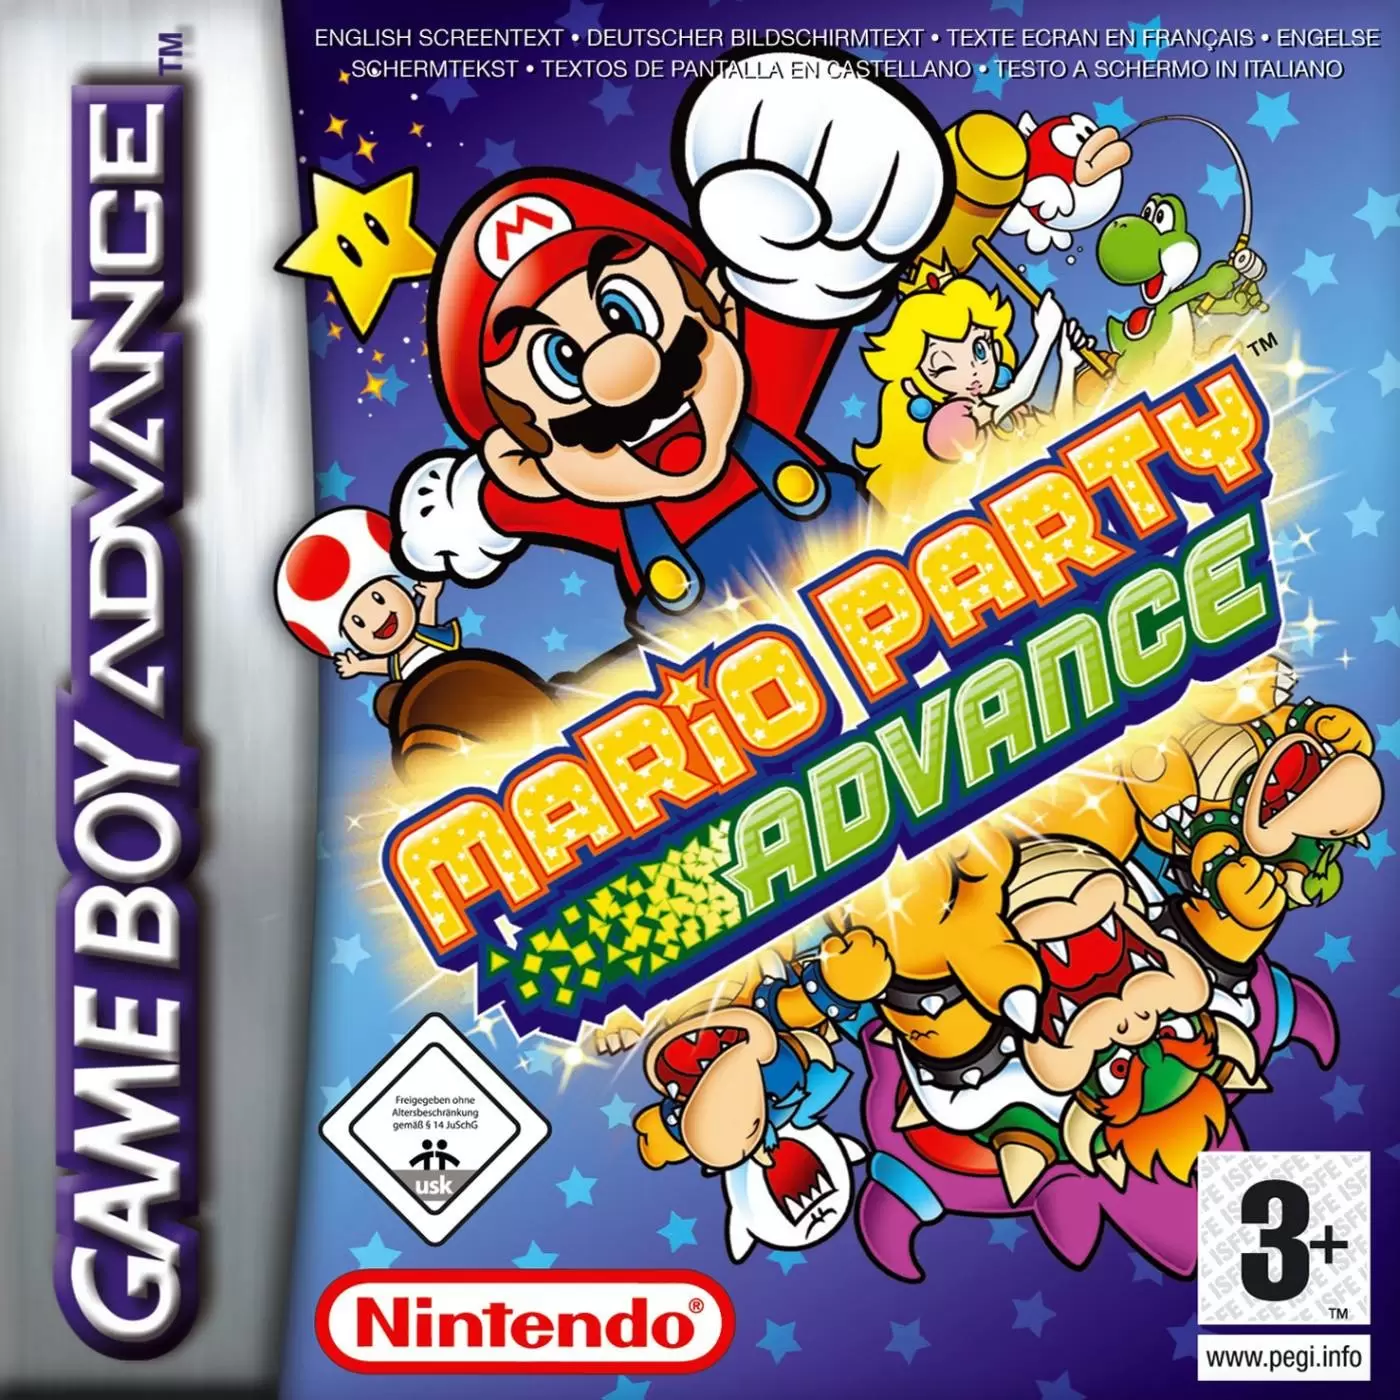 Jeux Game Boy Advance - Mario Party Advance